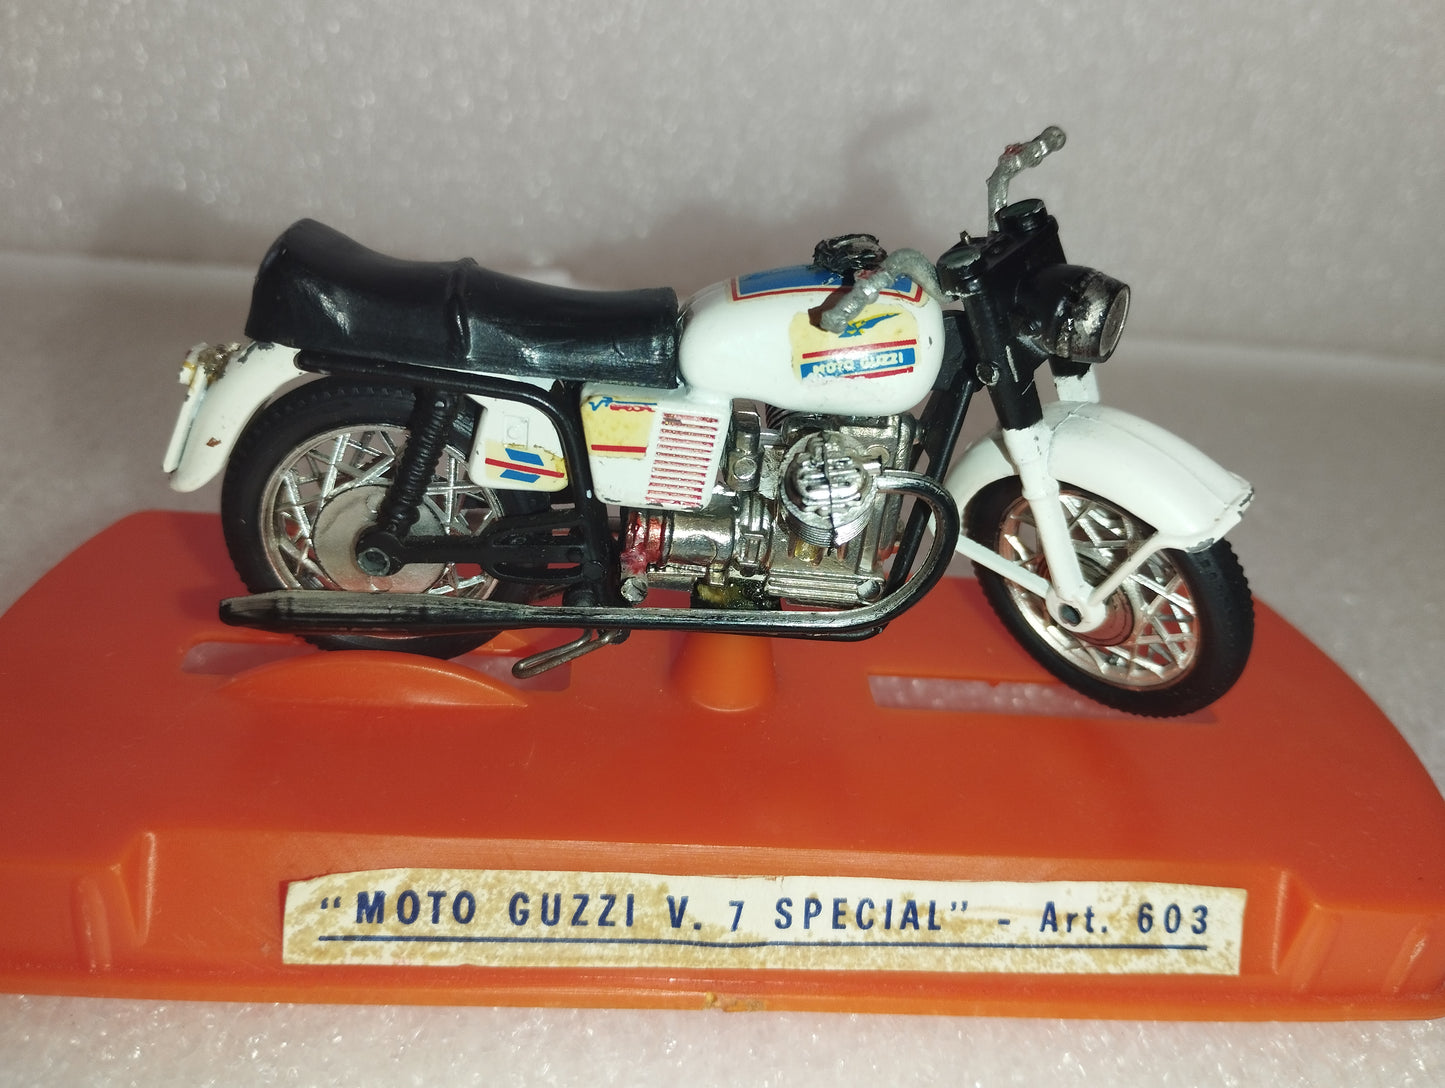 Mercury Moto Guzzi V7 Special model

 1:24 scale

 Art.603